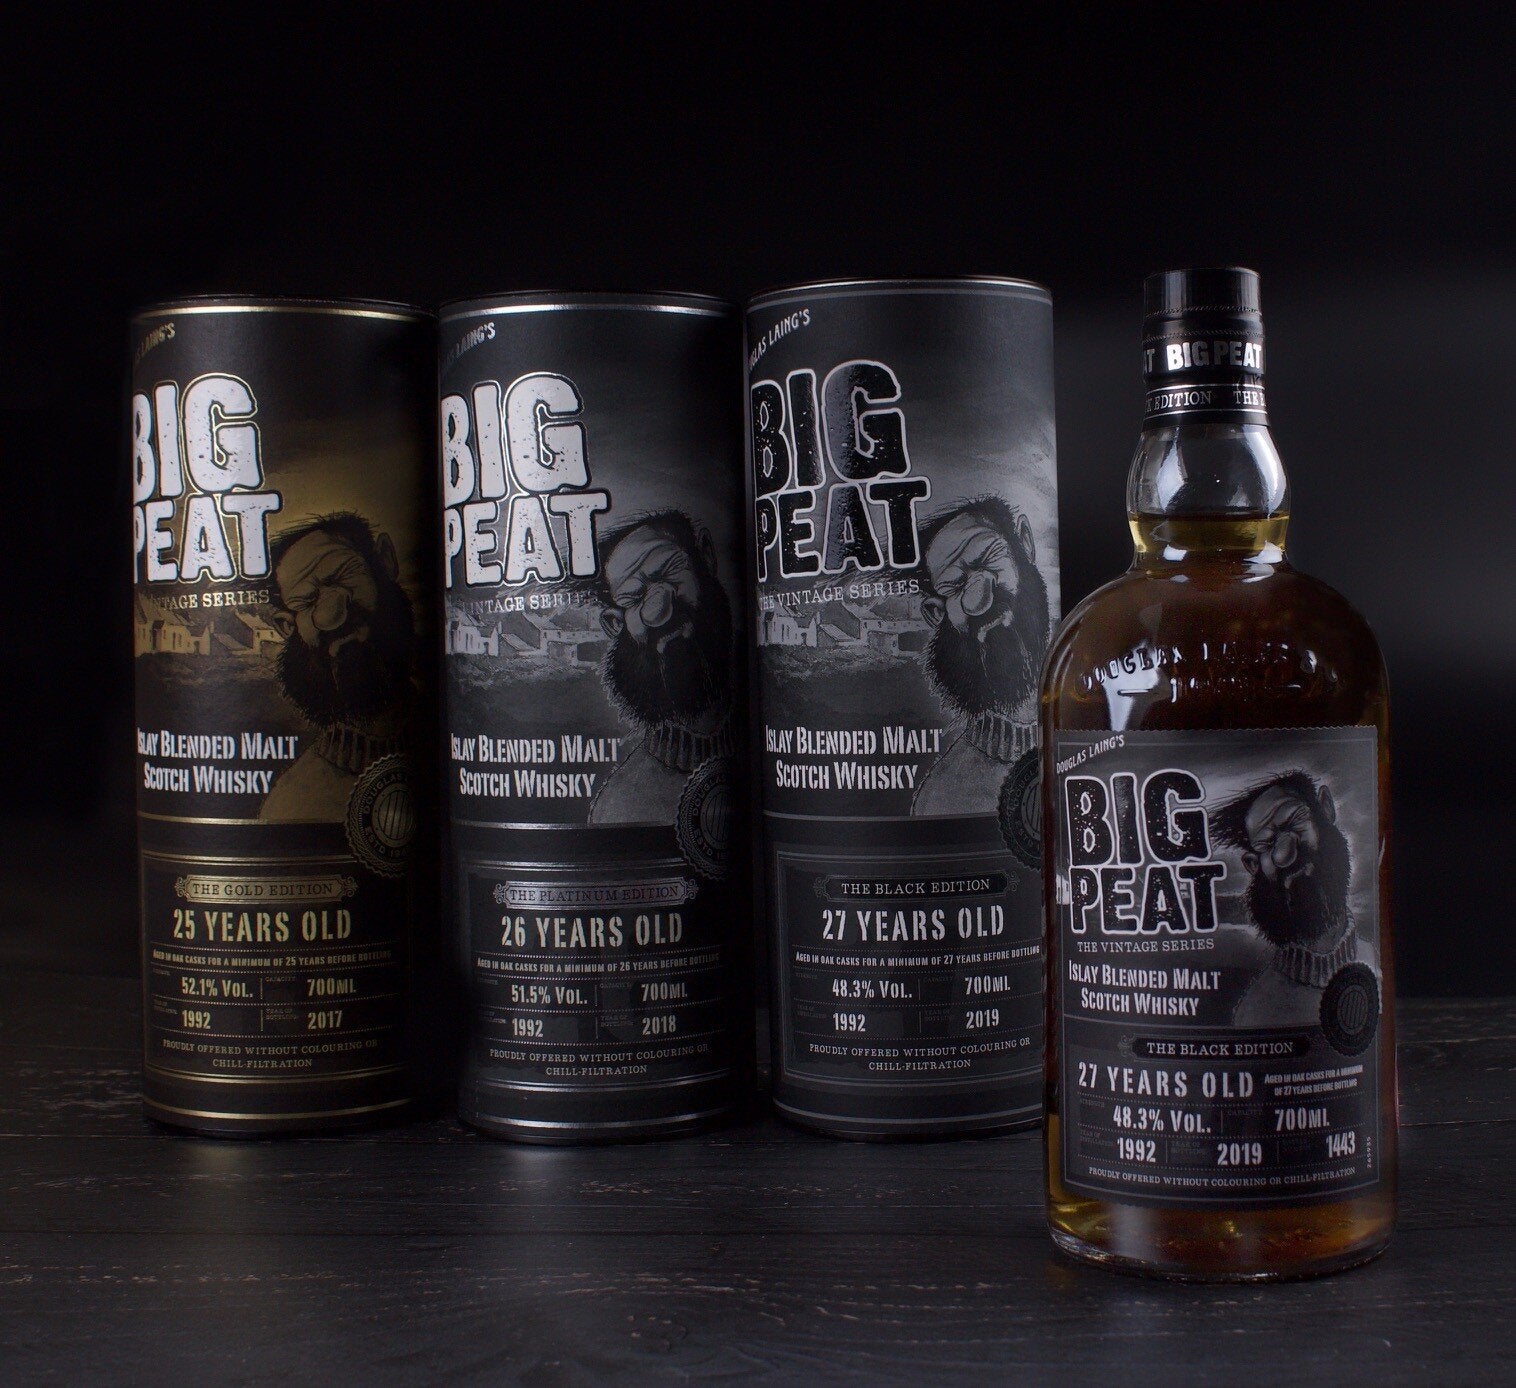 Big Peat Black Edition scotch whisky